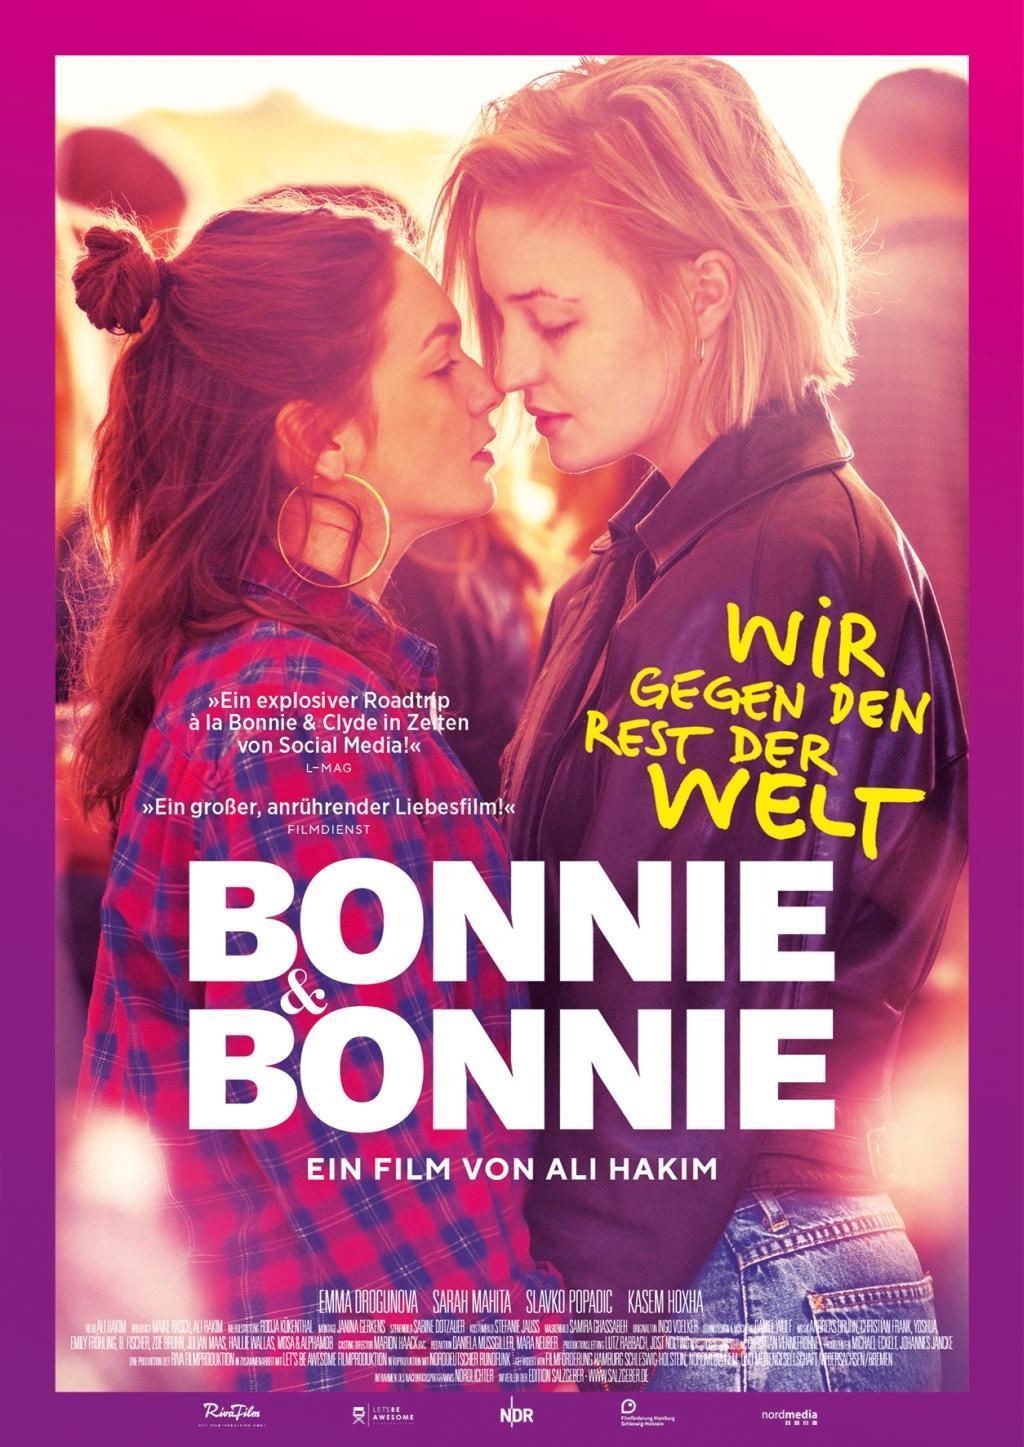 Image of Bonnie & Bonnie, 1 DVD